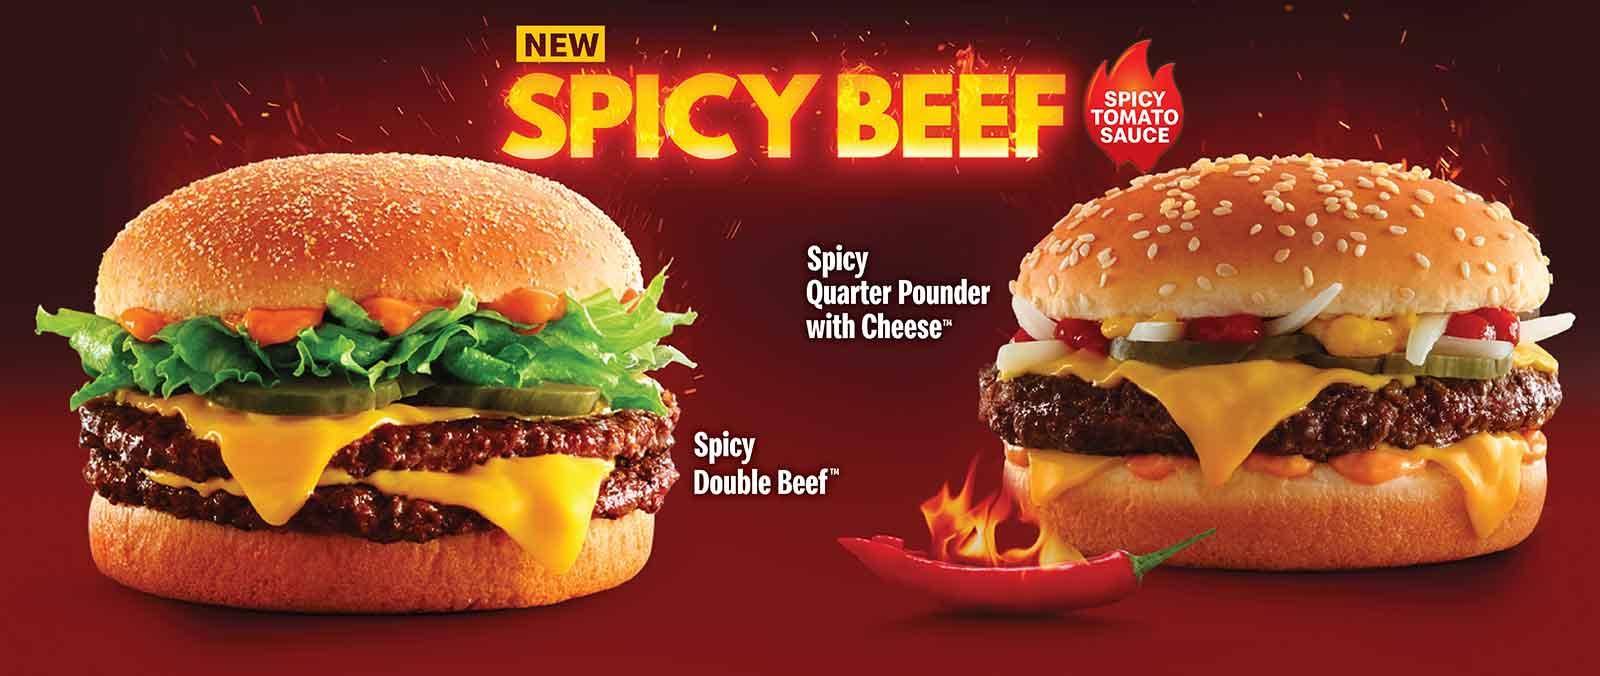 Spicy Beef Burgers's image'